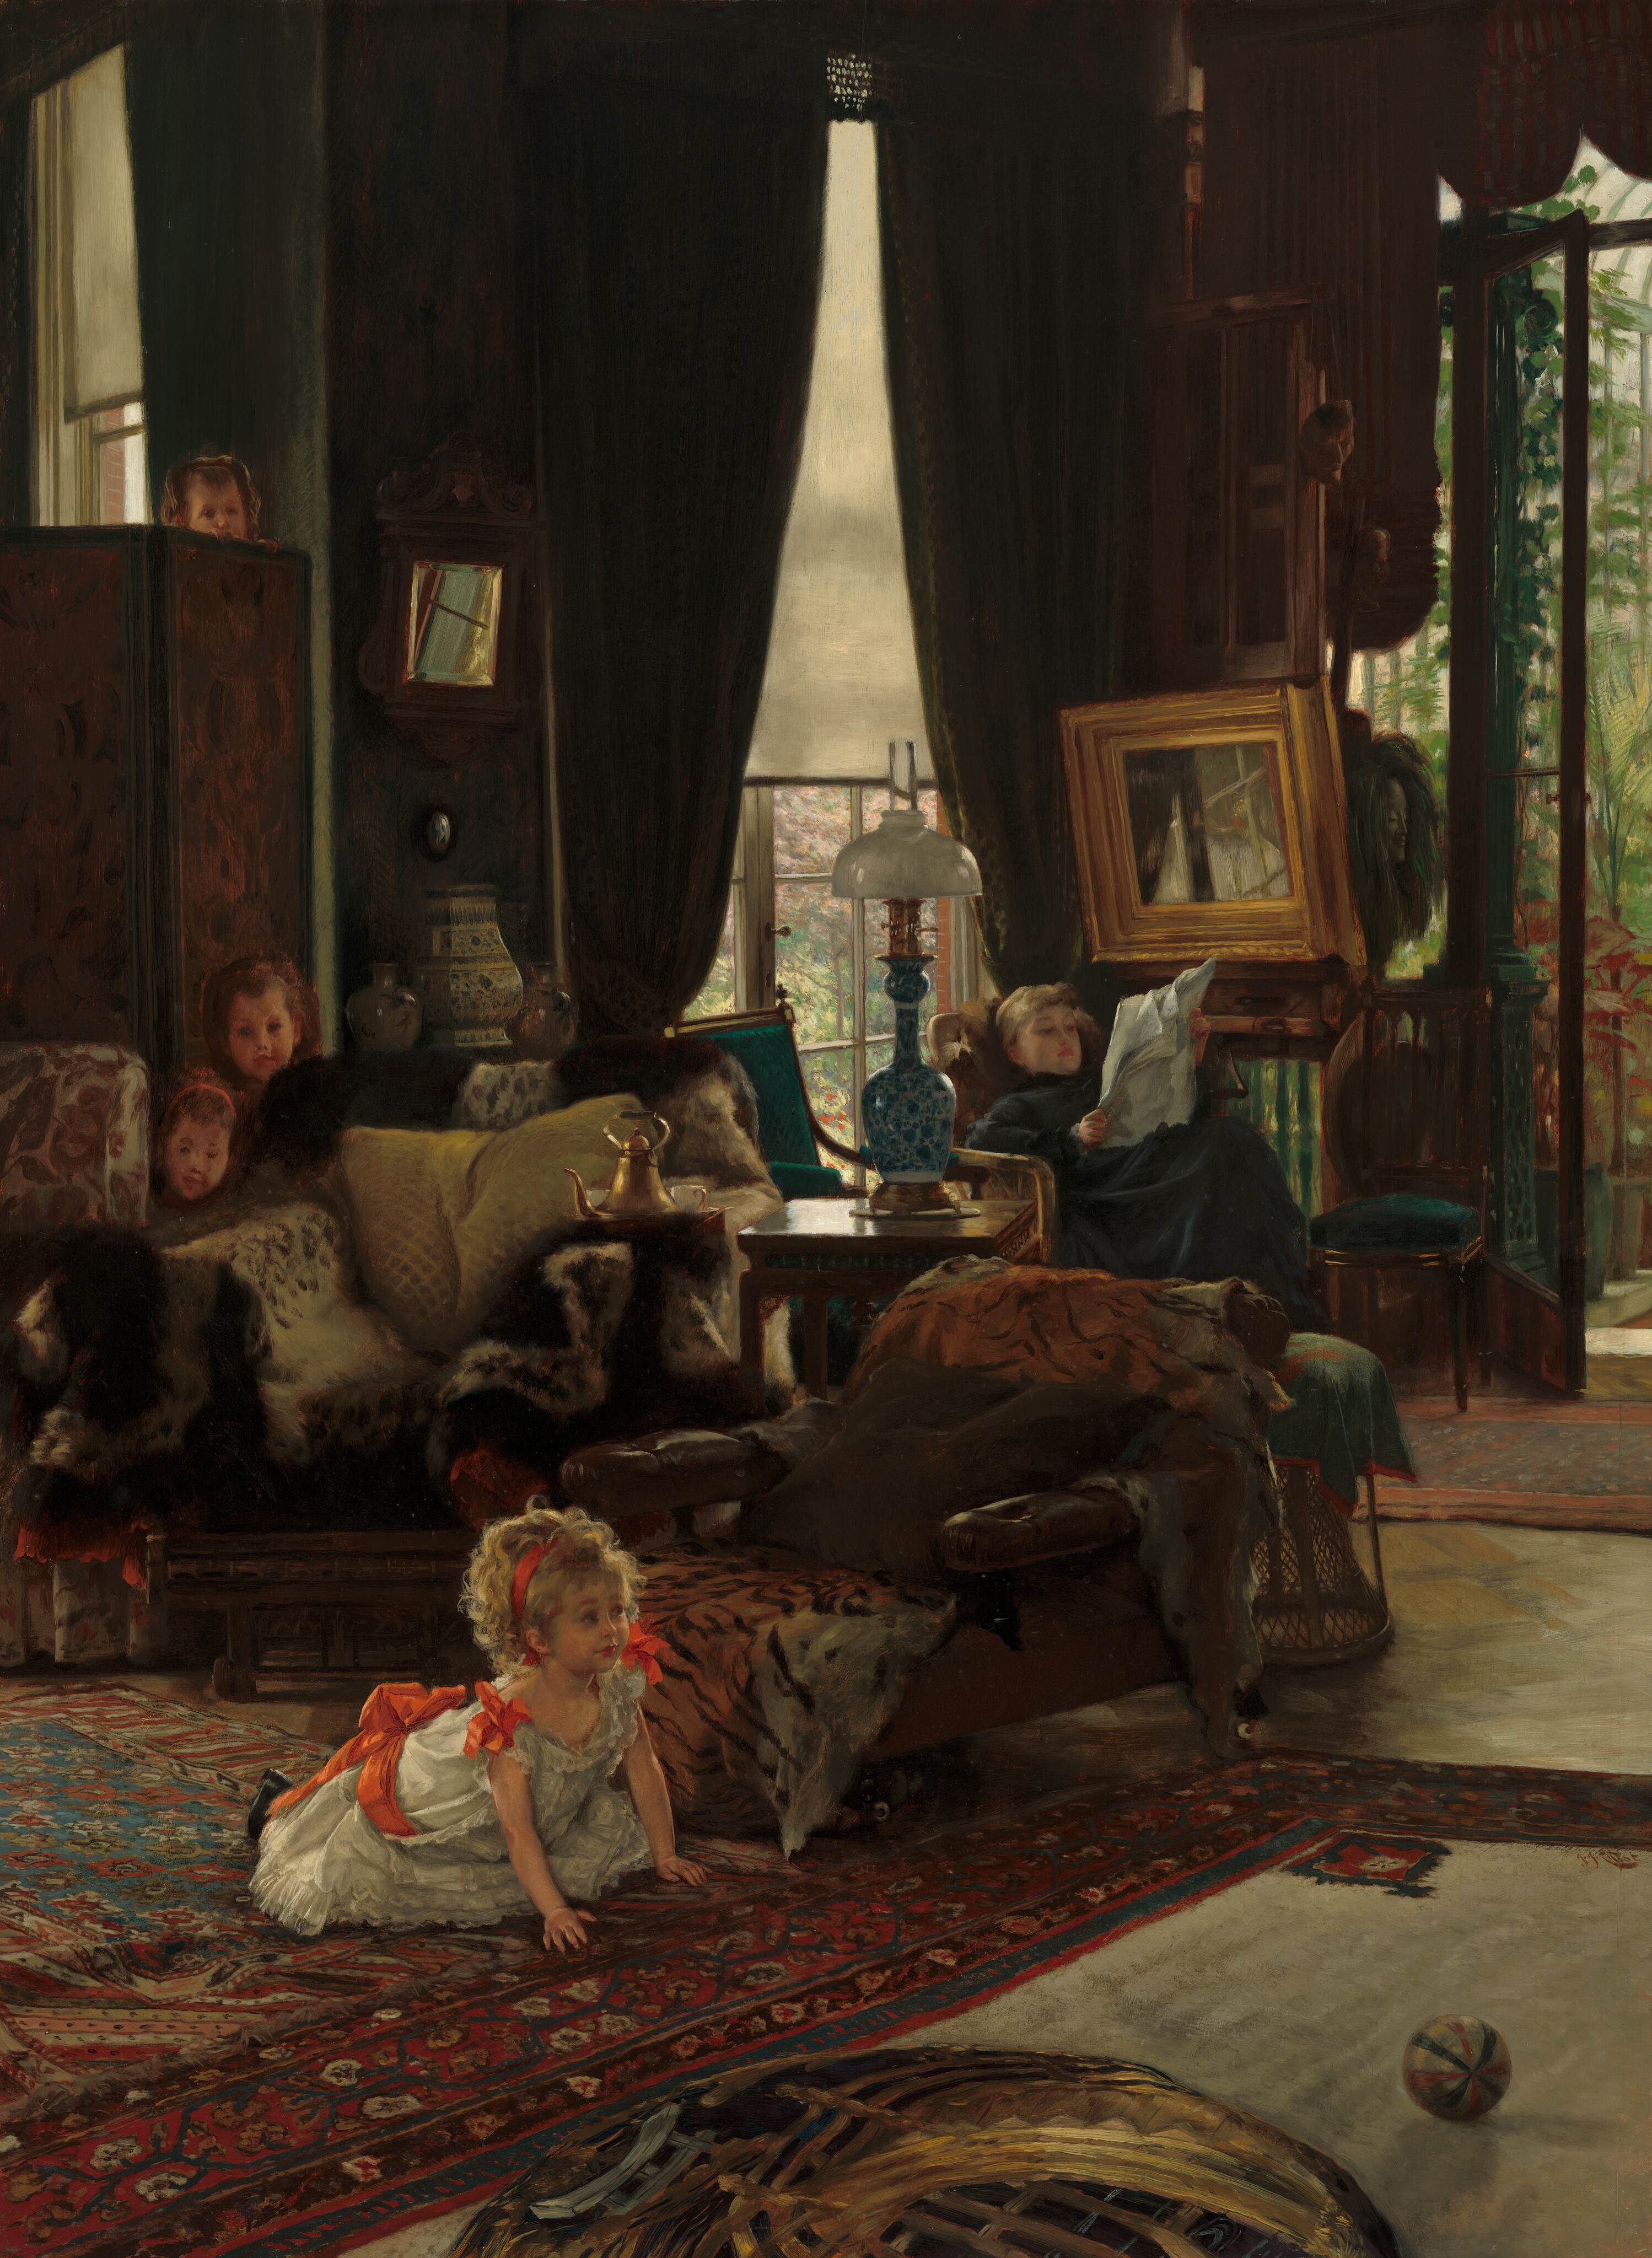 Verstoppertje by James Tissot - c. 1877 - 73.4 x 53.9 cm 